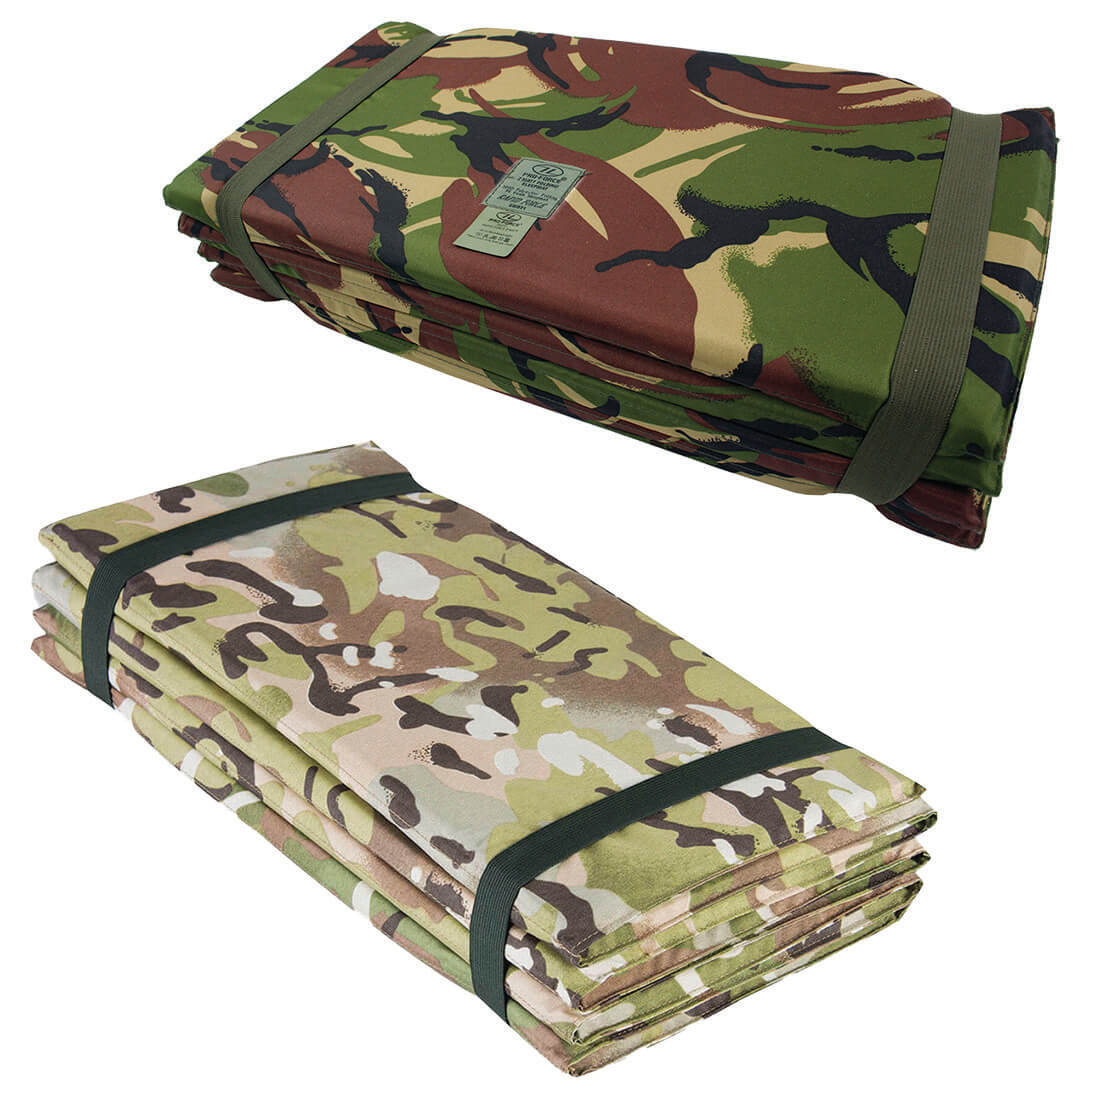 Highlander Z Mat Folding Sleep Mat - John Bull Clothing